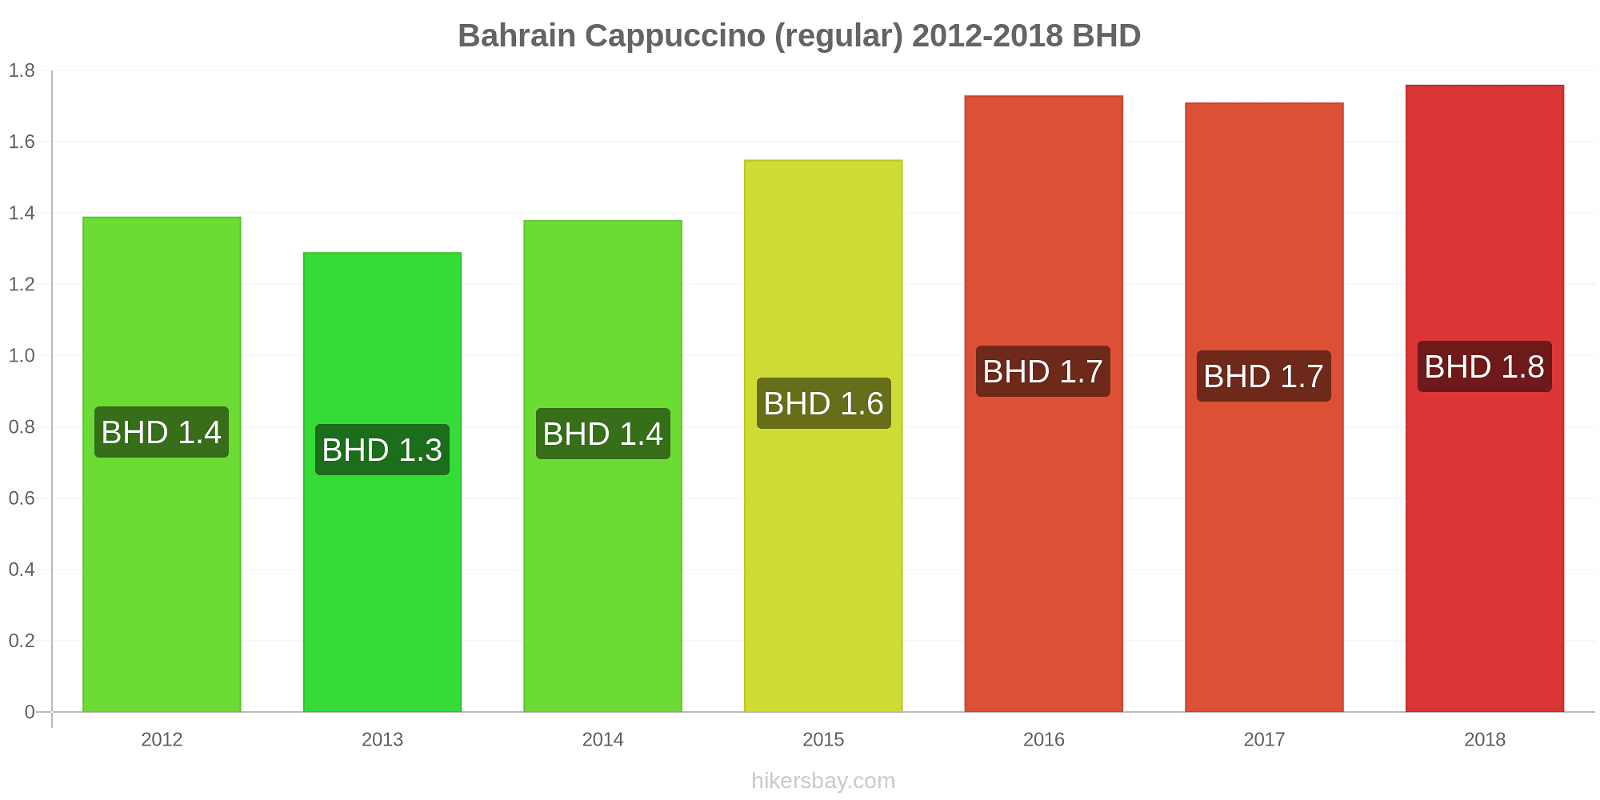 Bahrain price changes Cappuccino hikersbay.com